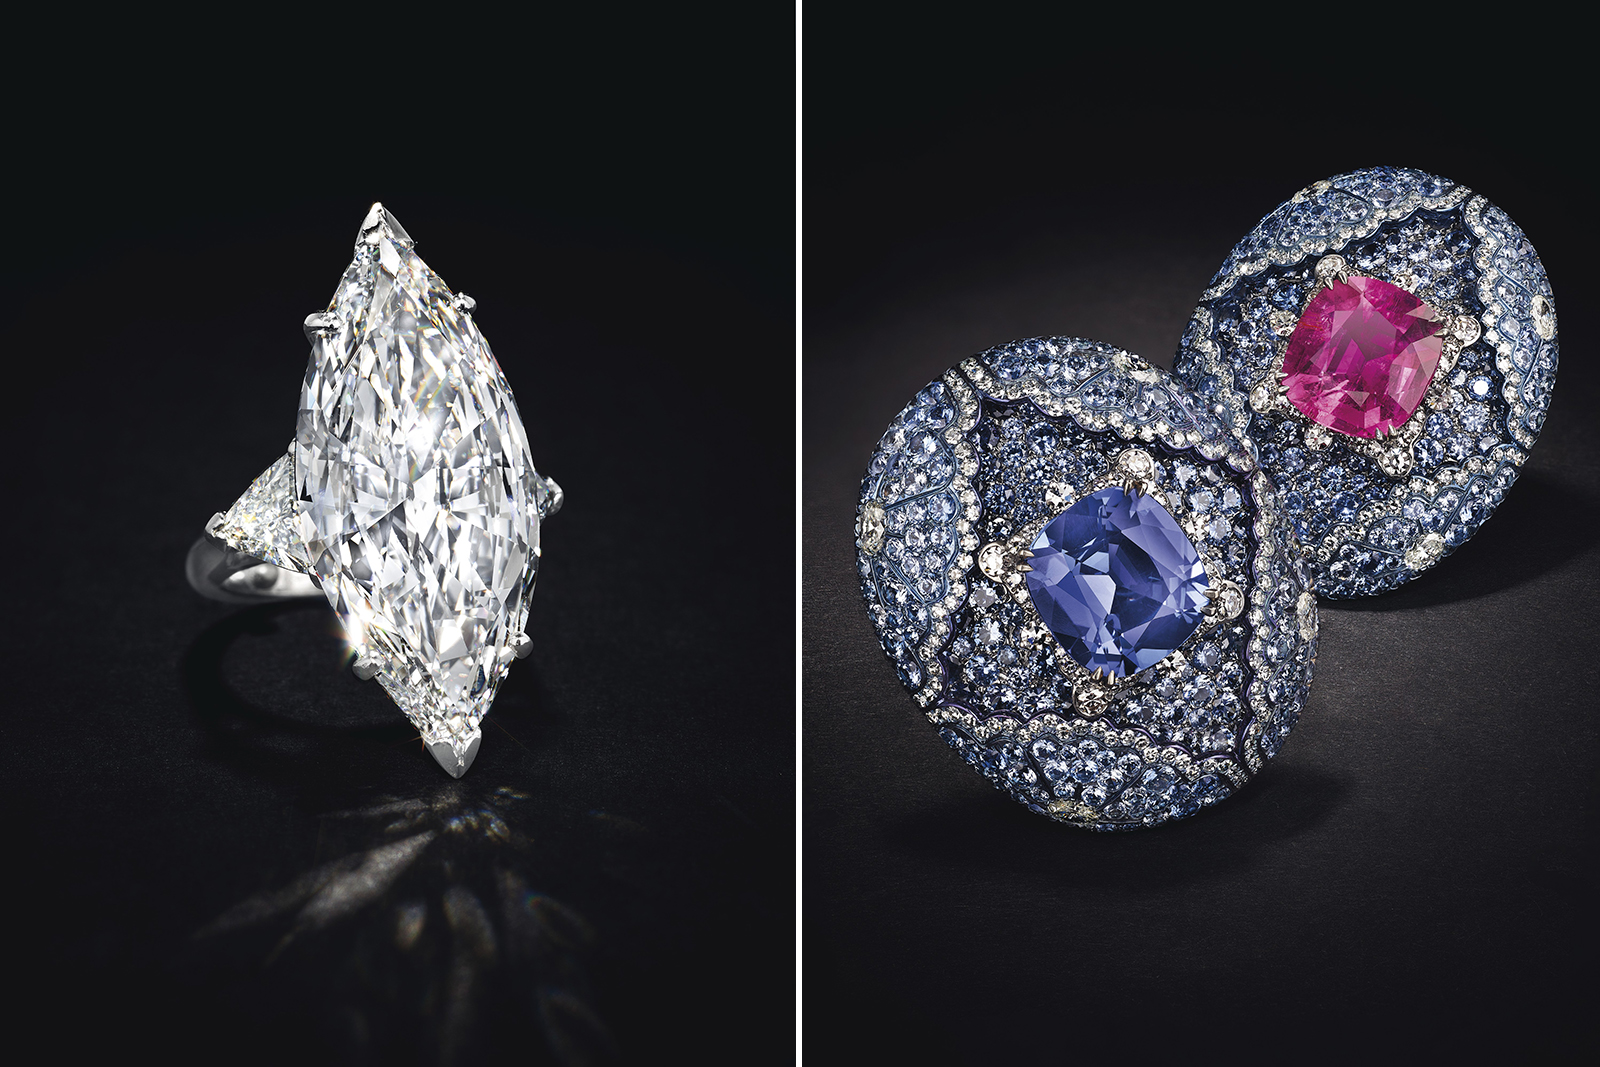 Слева: кольцо с бриллиантом цвета D весом 16.69 карата. Справа: серьги Carnet с рубеллитами, танзанитами, сапфирами и бриллиантами